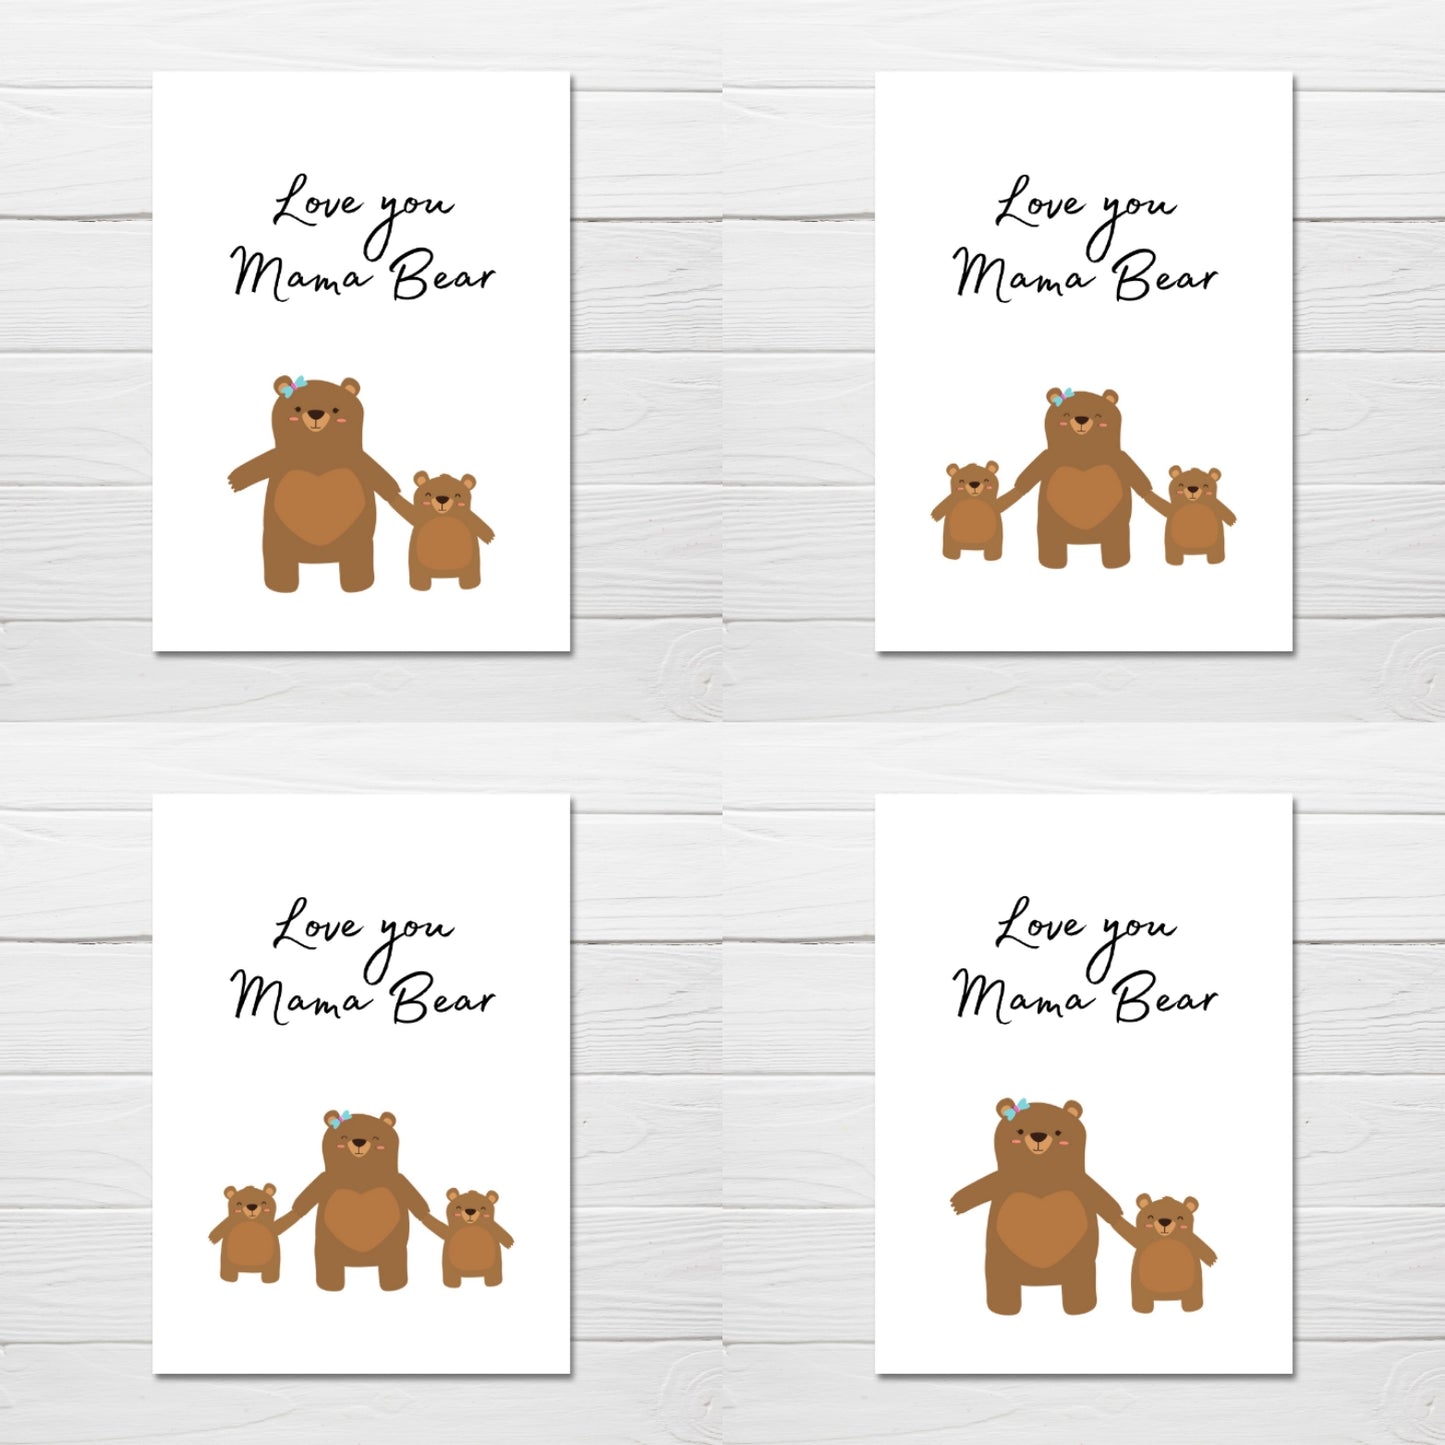 Mothers Day Card | Love You Mama Bear | Cute Card